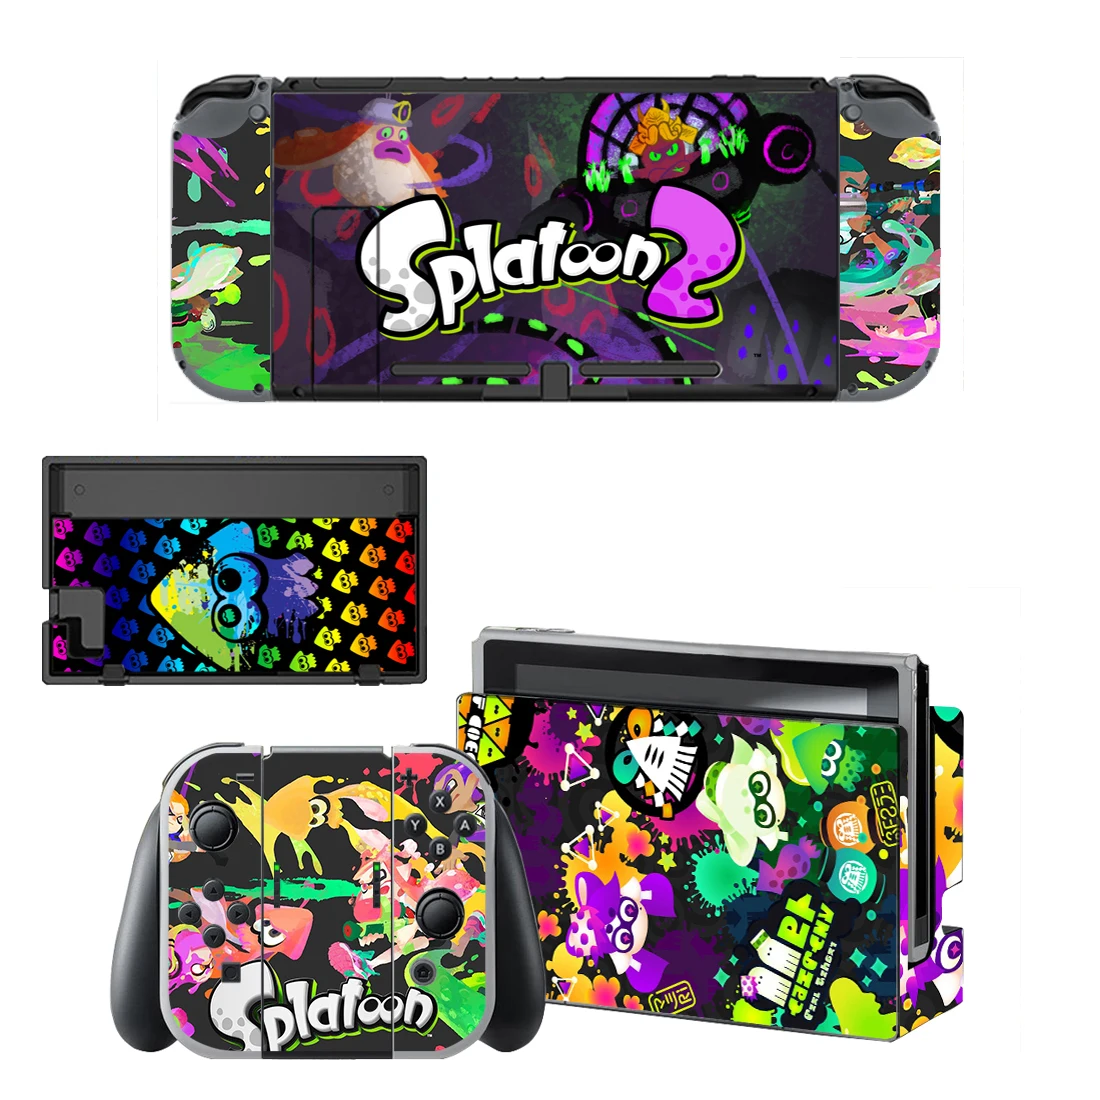 Splatoon 2 Nintendo Switch Skin Sticker NintendoSwitch stickers skins for Nintend Switch Console and Joy-Con Controller